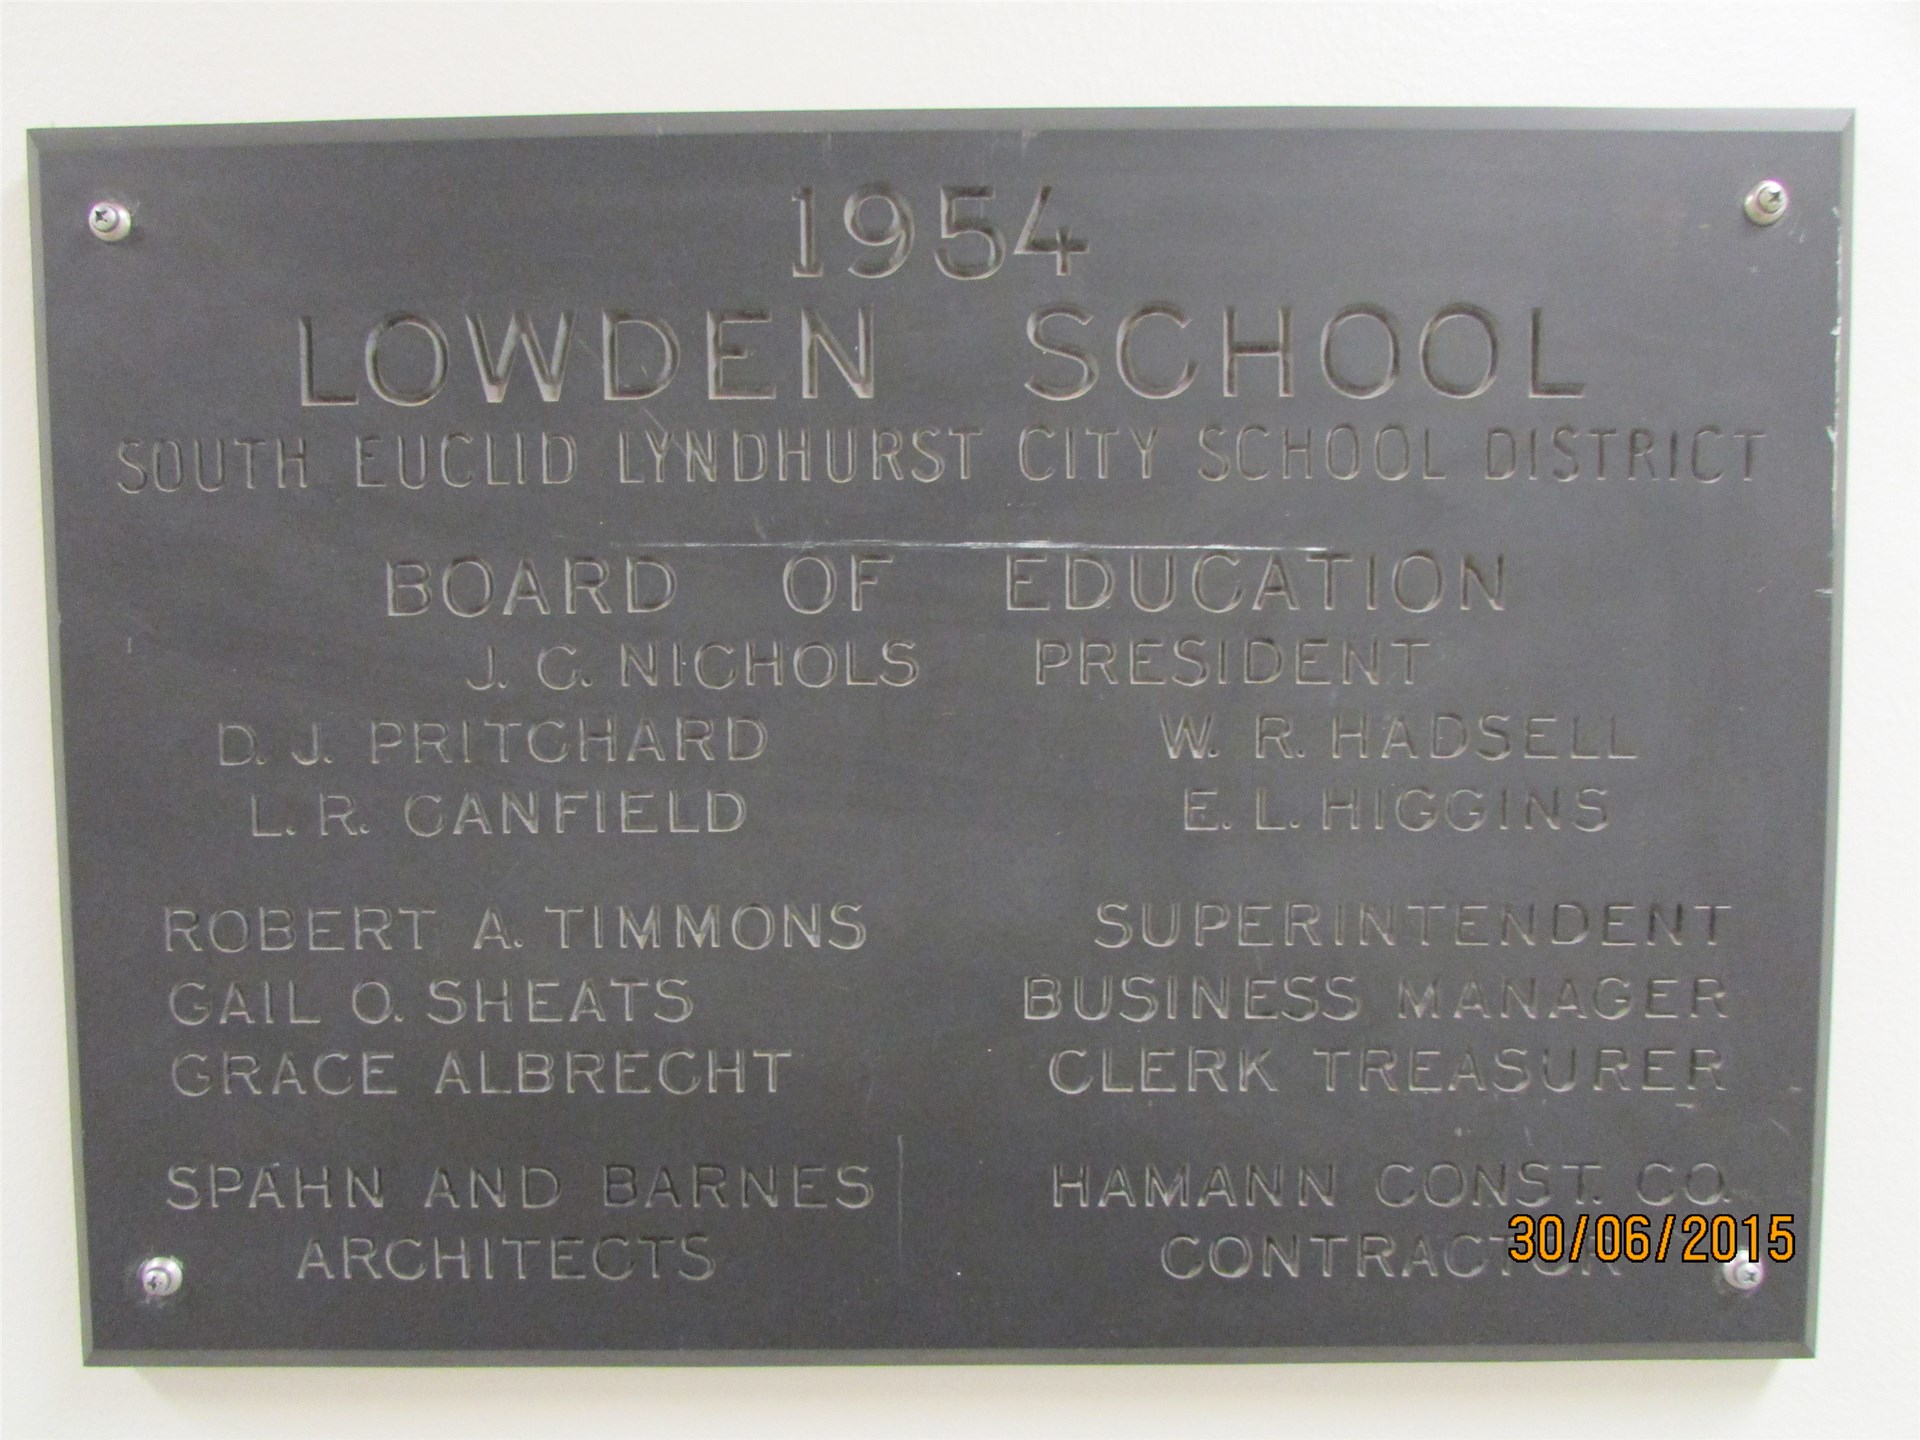 Lowden School 1954